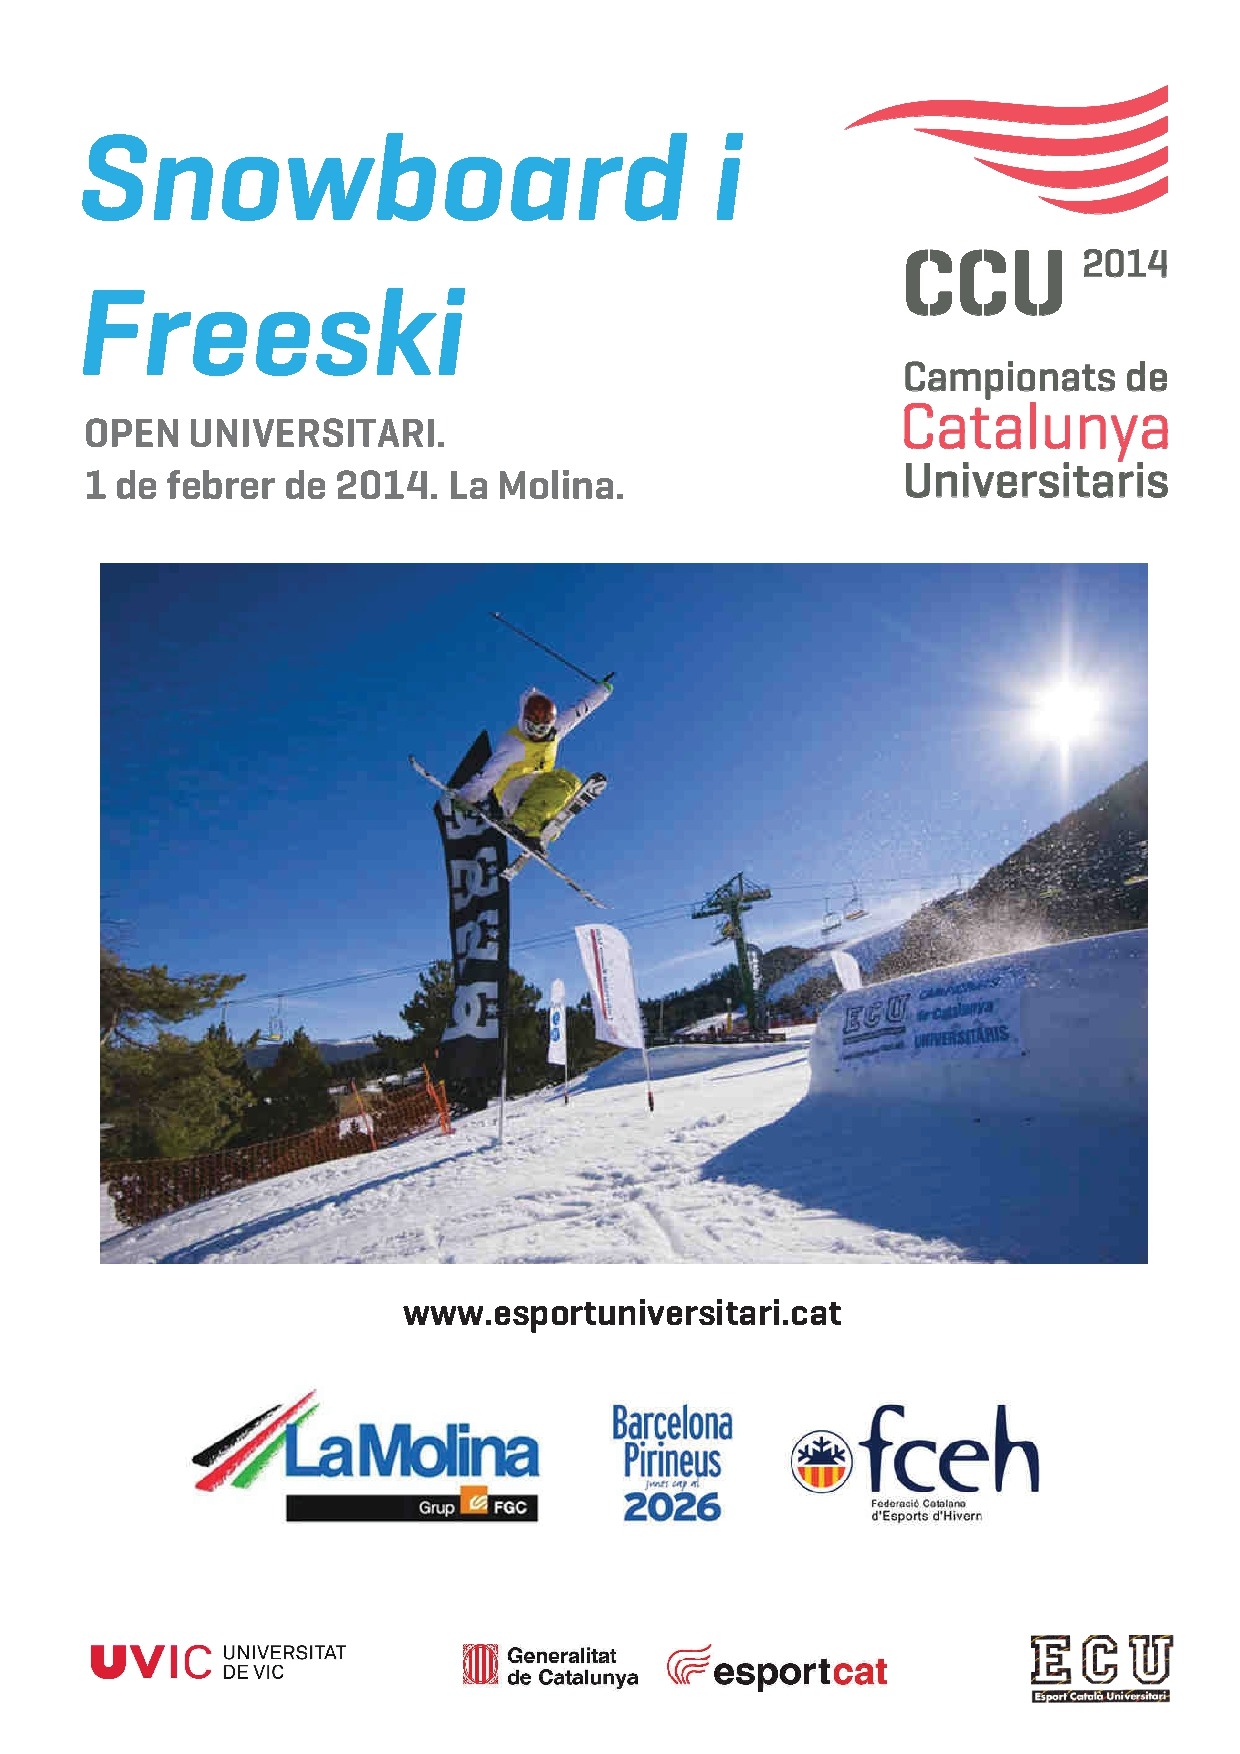 CCU Campionat de Catalunya Universitaris 2014